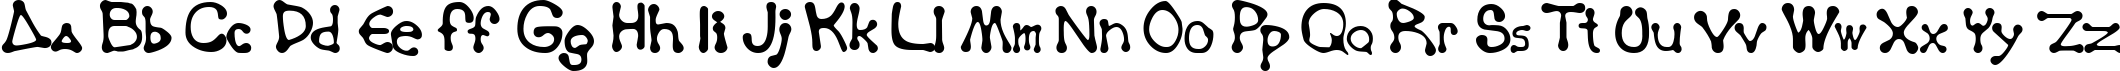 Пример написания английского алфавита шрифтом Panama Normal